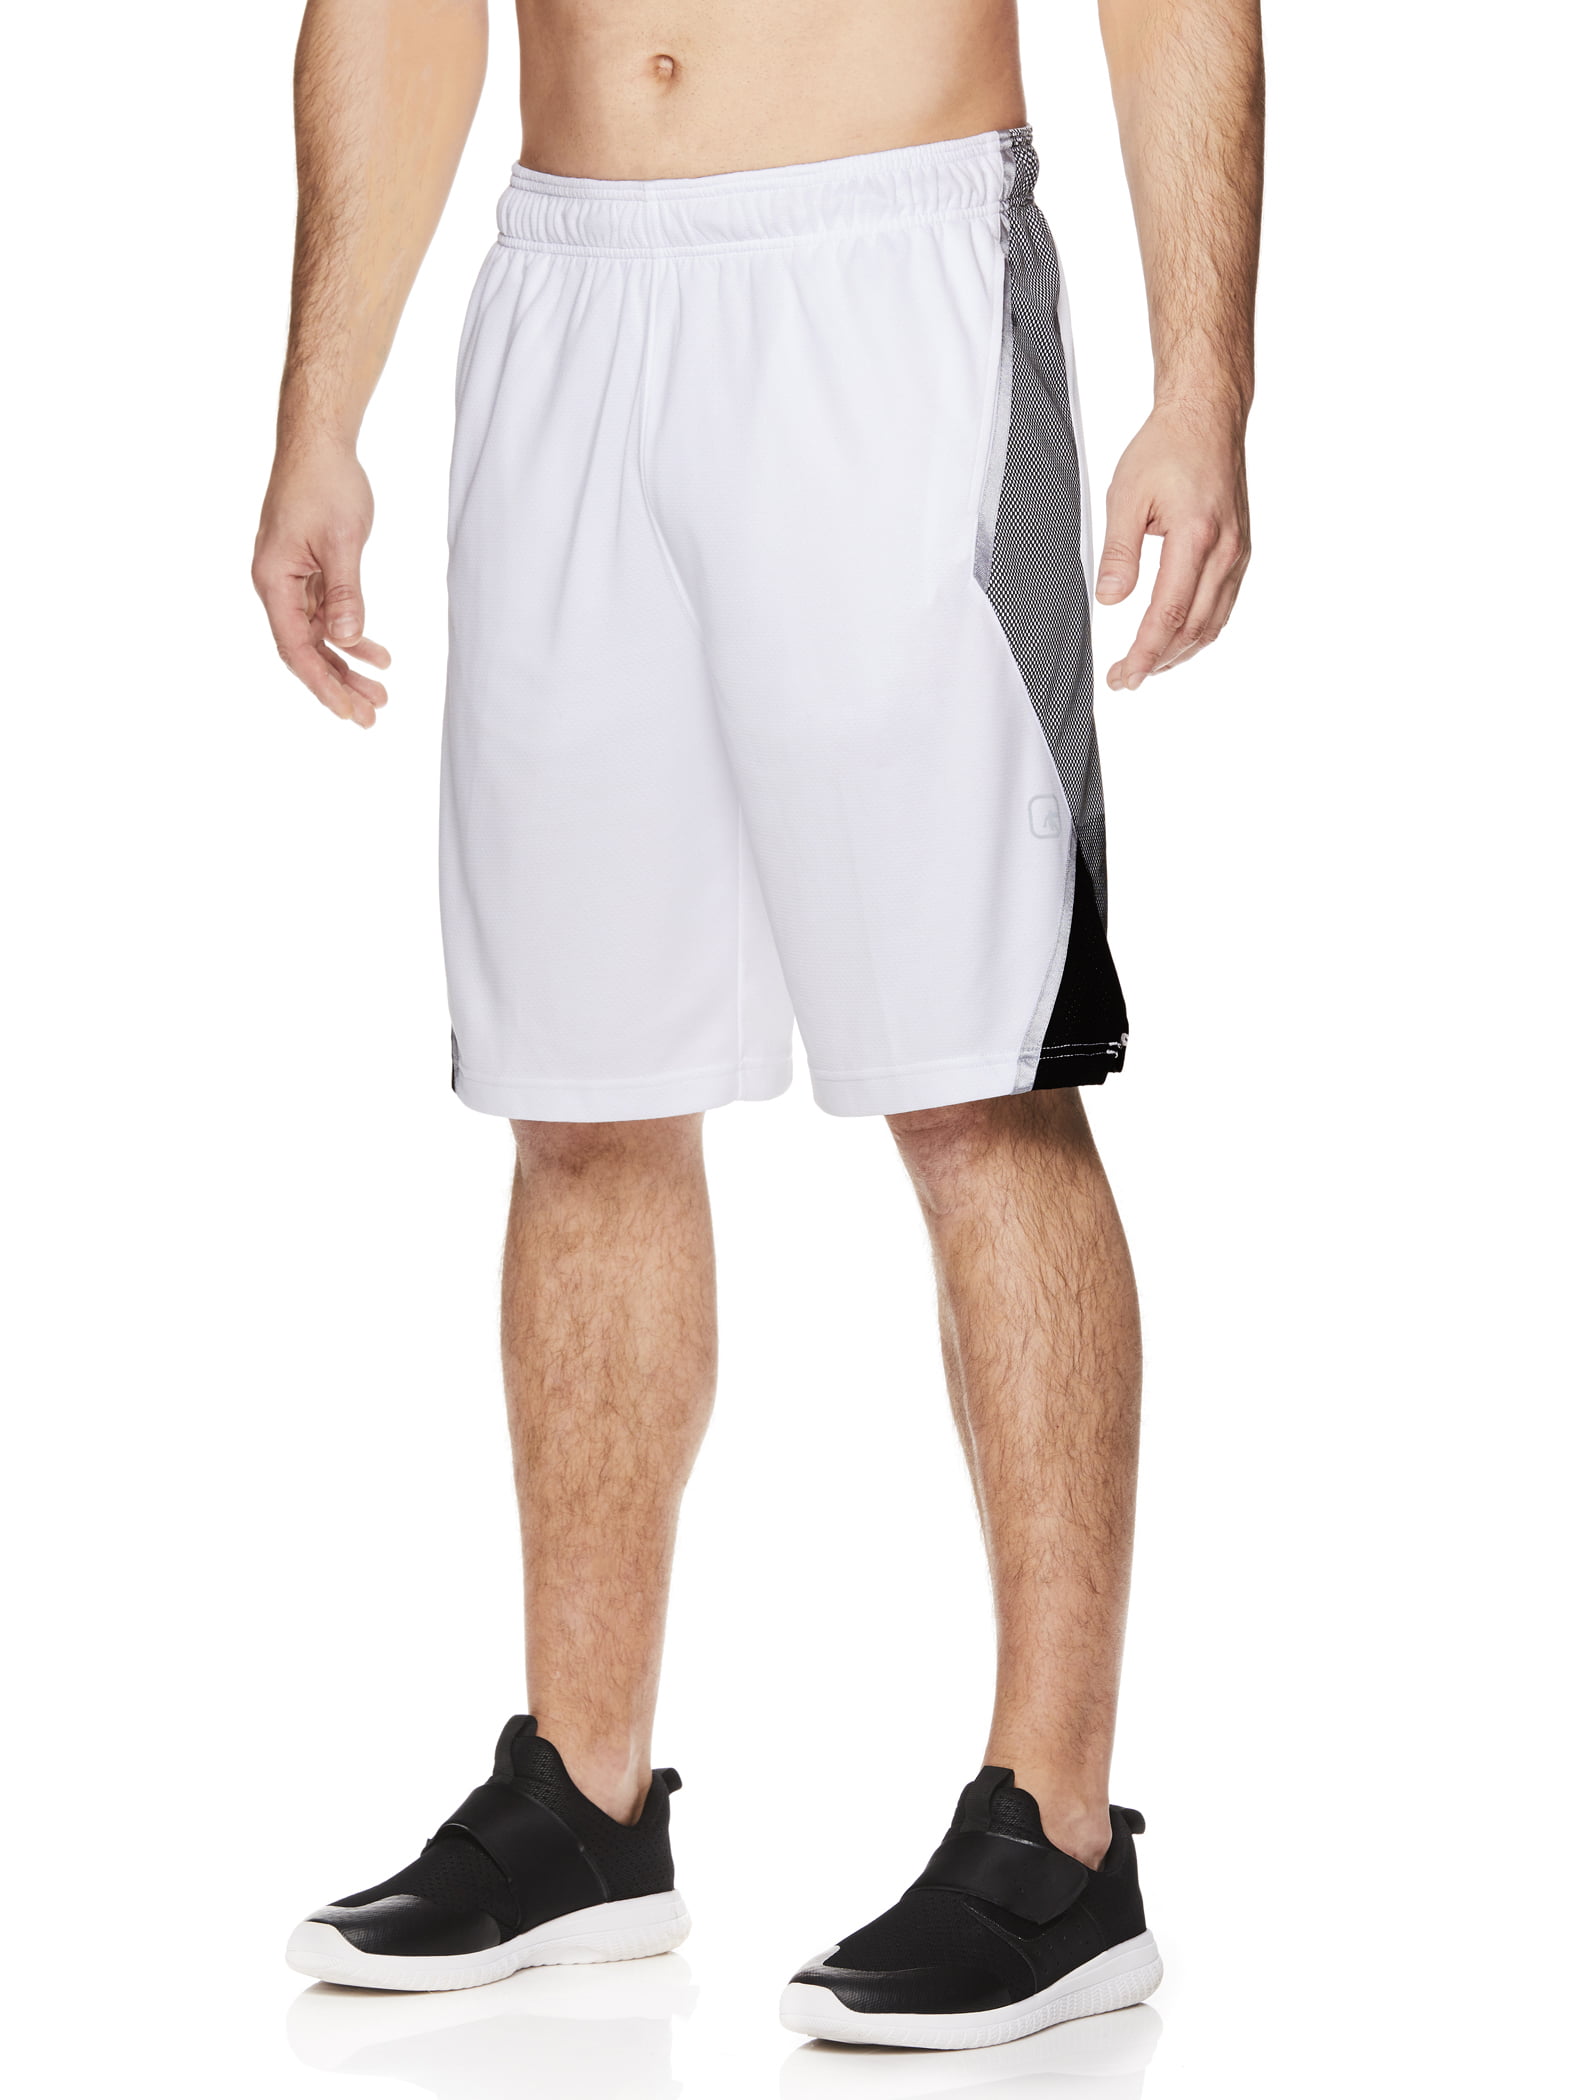 AND1 Men's and Big Men's Mesh Basketball Short, up to 5XL - Walmart.com